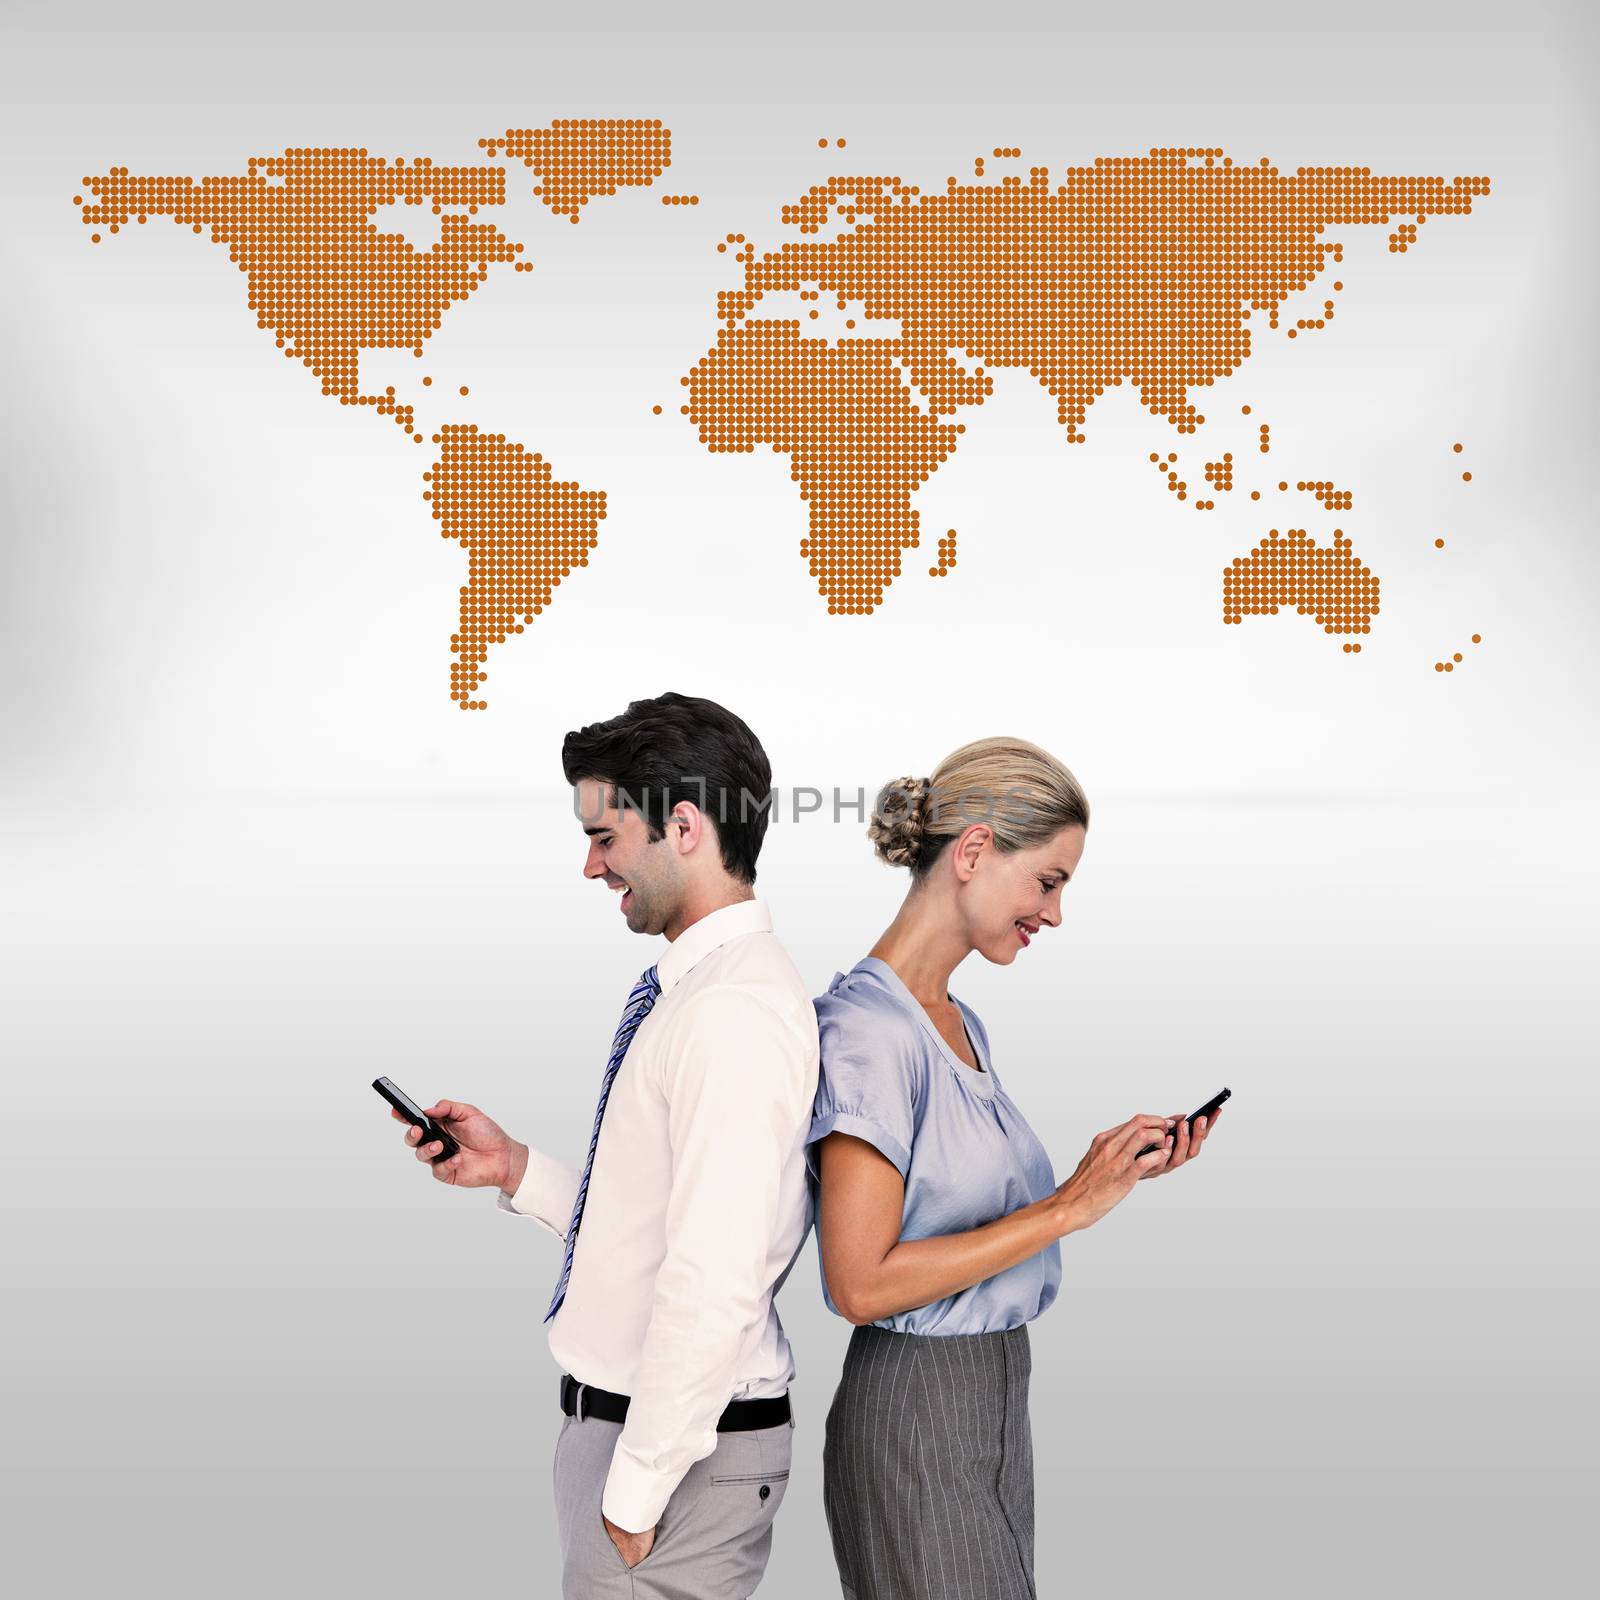 Business people using smartphone back to back against orange world map on white background